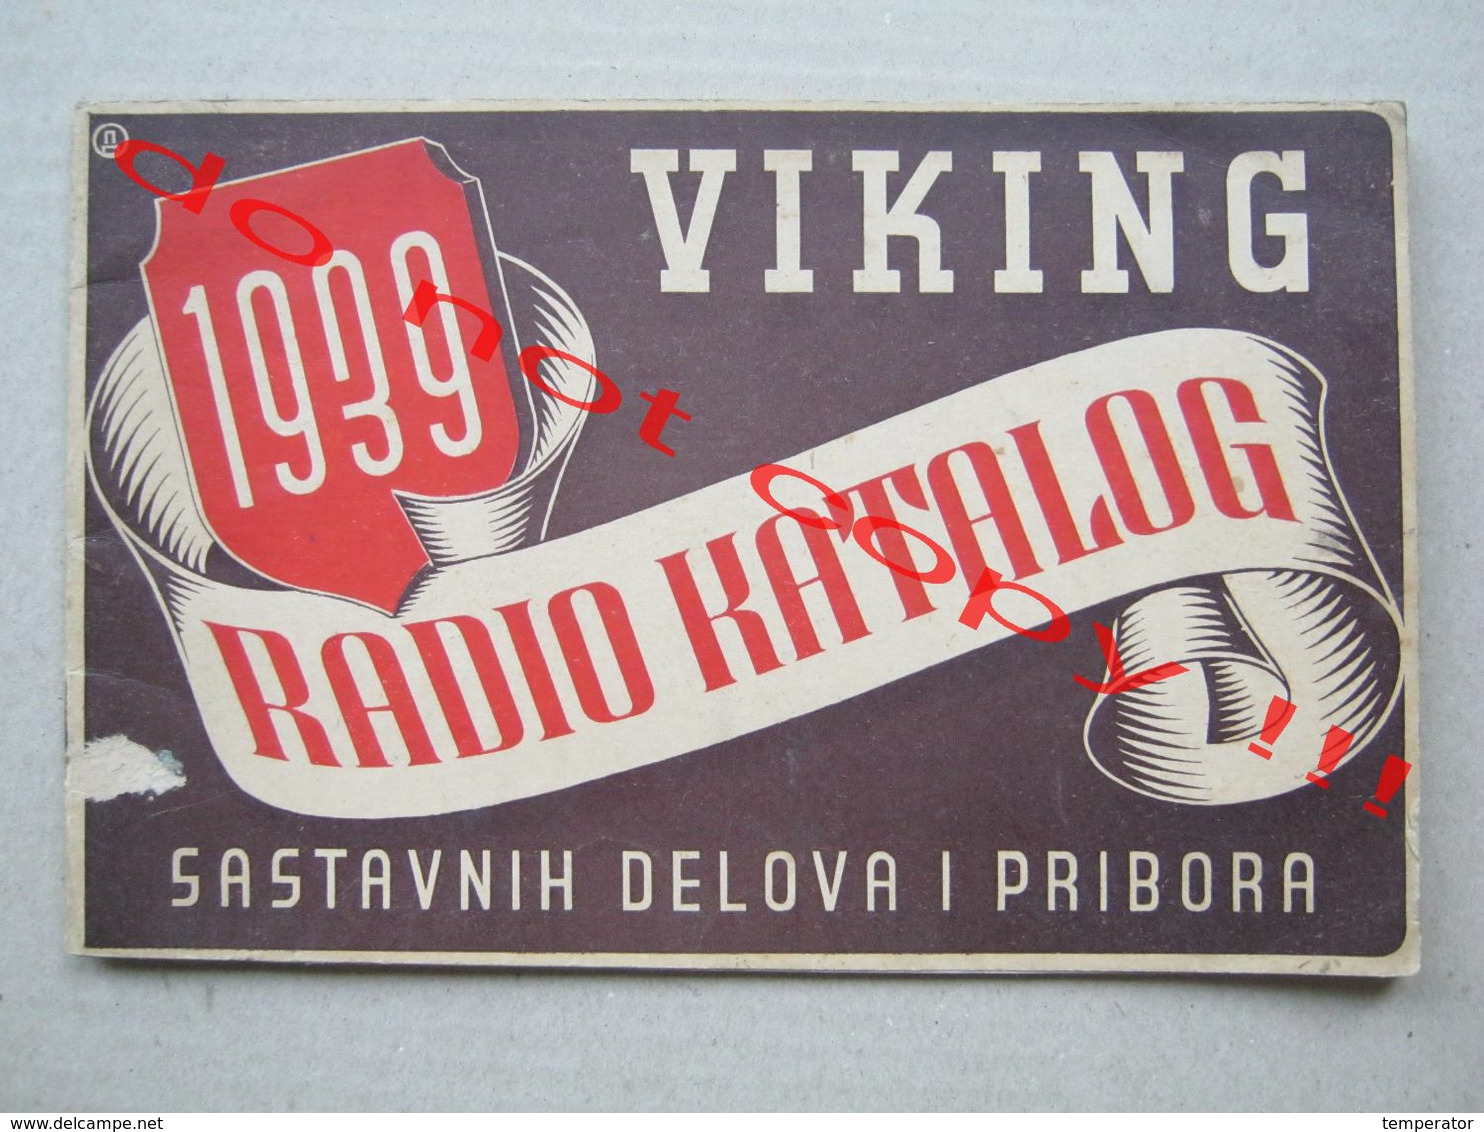 " VIKING " ( 1939 ) / RADIO KATALOG SASTAVNIH DELOVA I PRIBORA With Price List - Kingdom Of Yugoslavia - Literature & Schemes